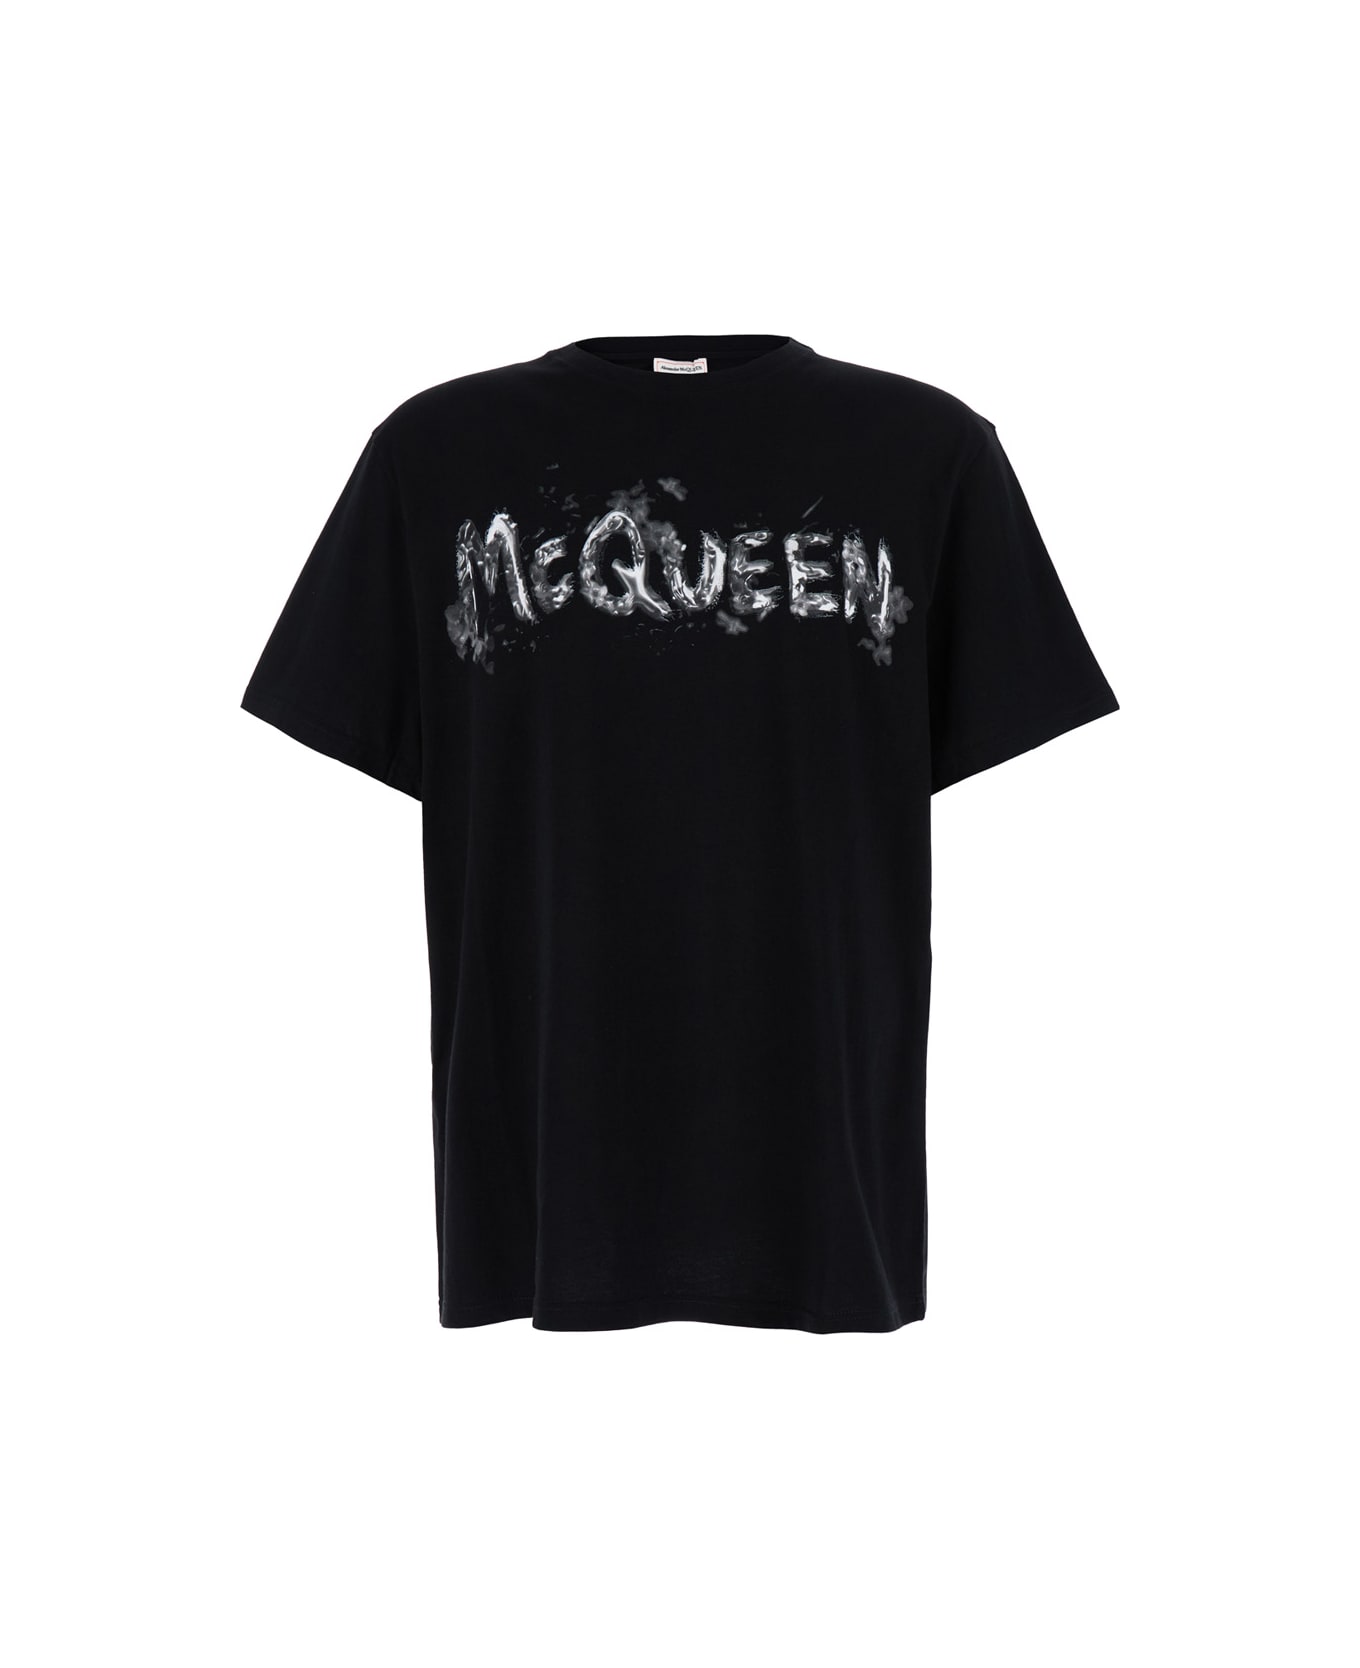 Alexander McQueen Black T-shirt With Graffiti Logo Print In Cotton Man - Black